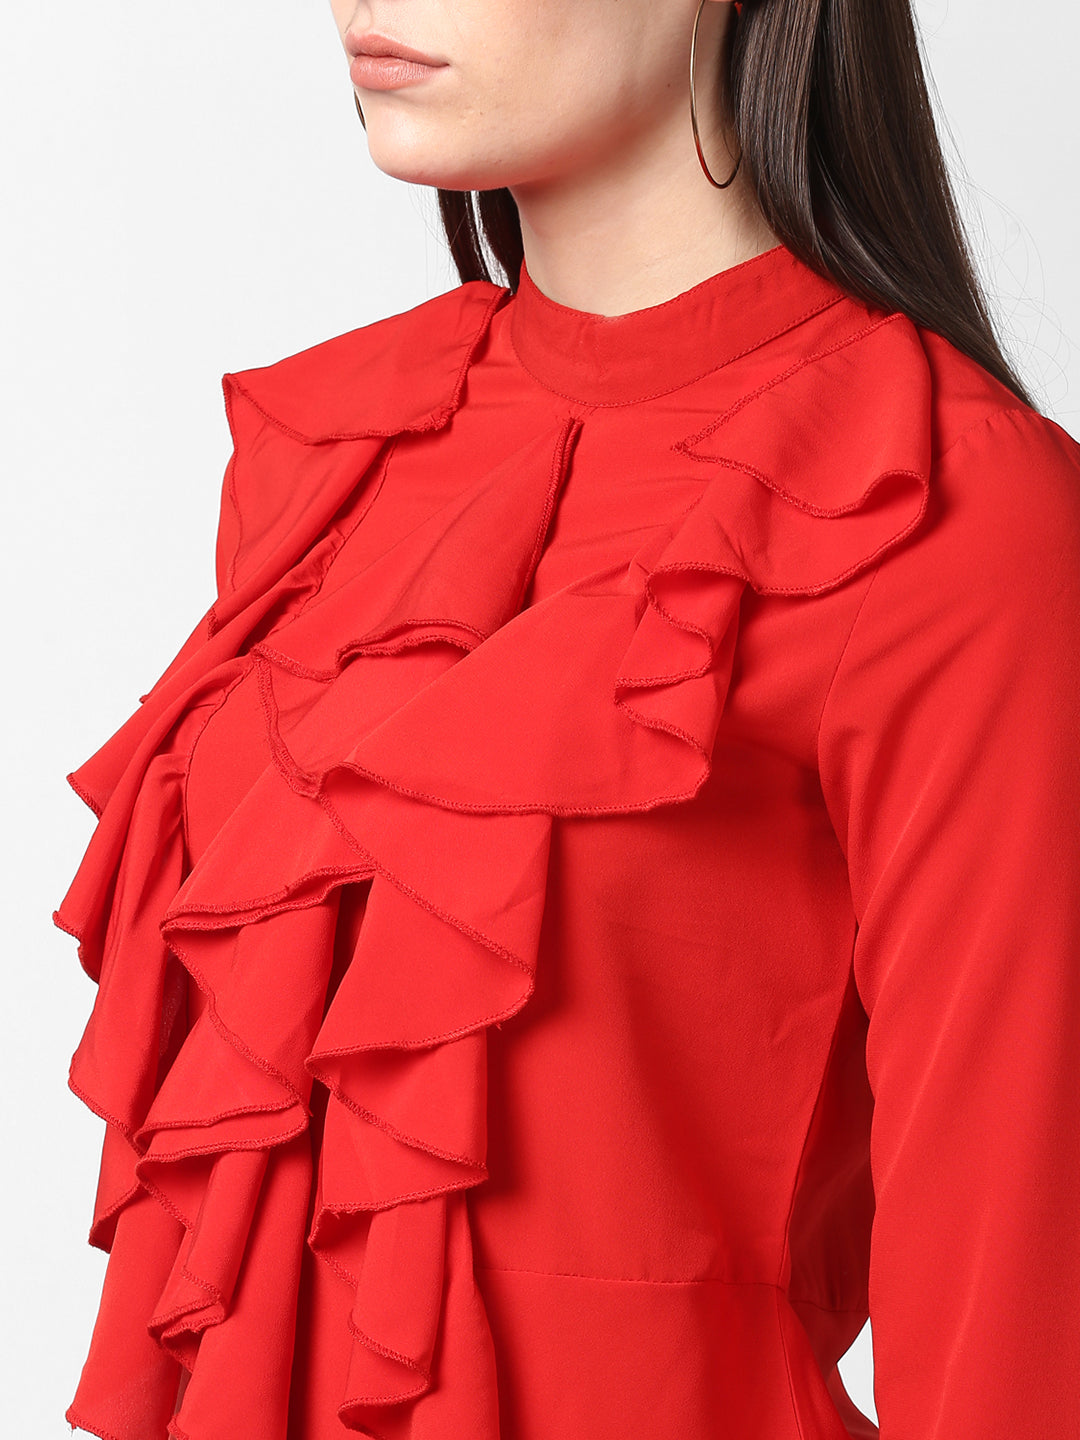 Women's Red Front Ruffle Bell Sleeve Dress